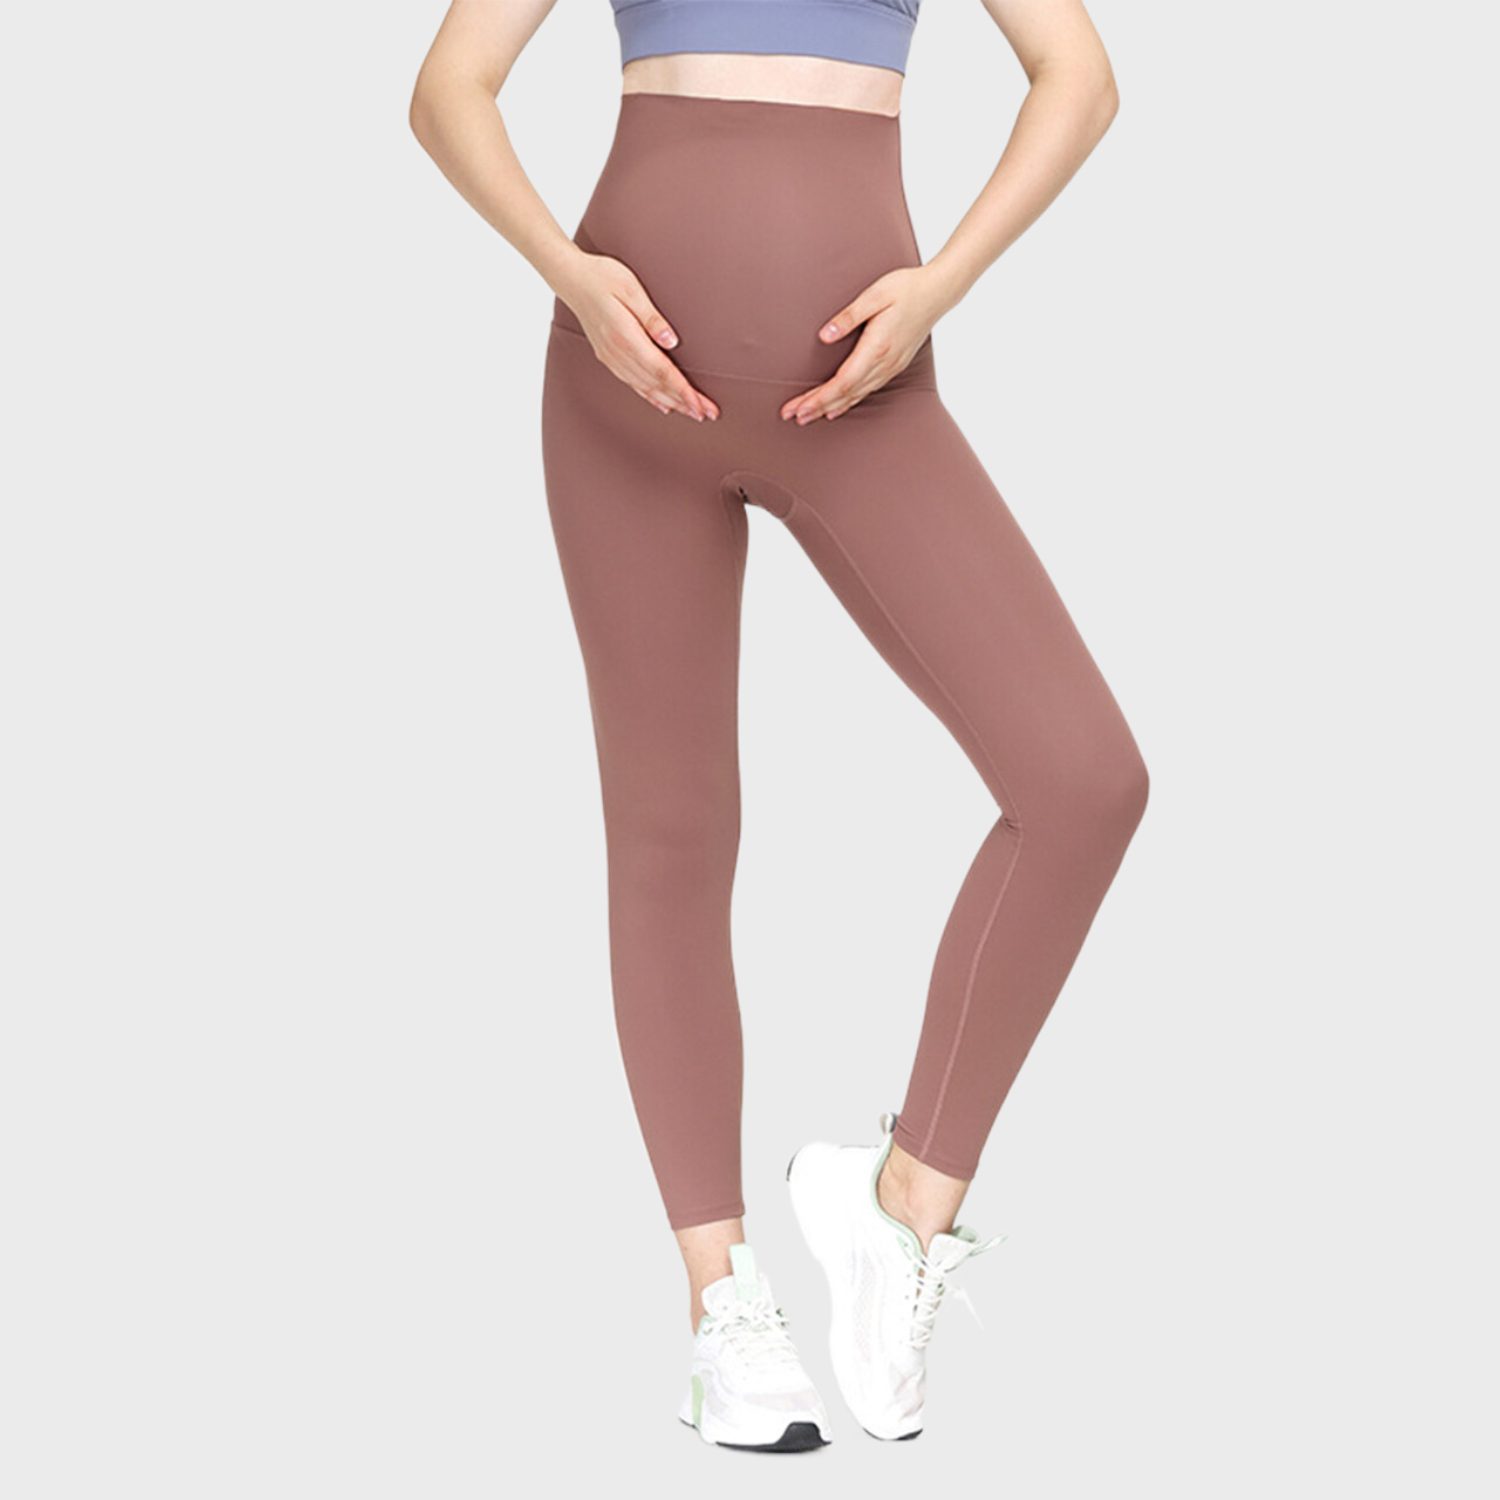 Plus Size Maternity Yoga Pants